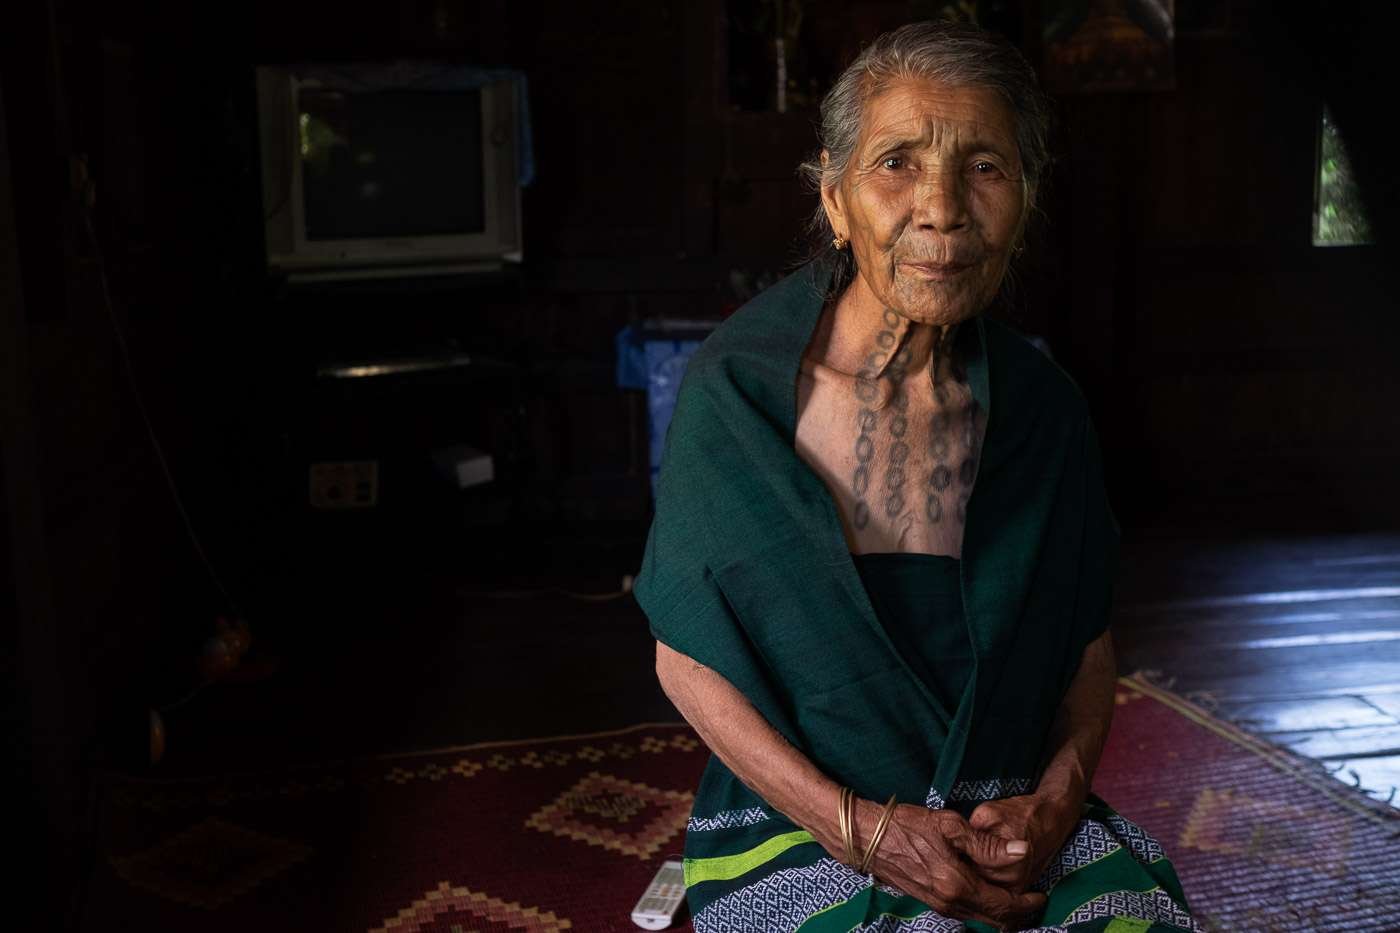 myanmar photo tours - chin state - photo of tribeswoman